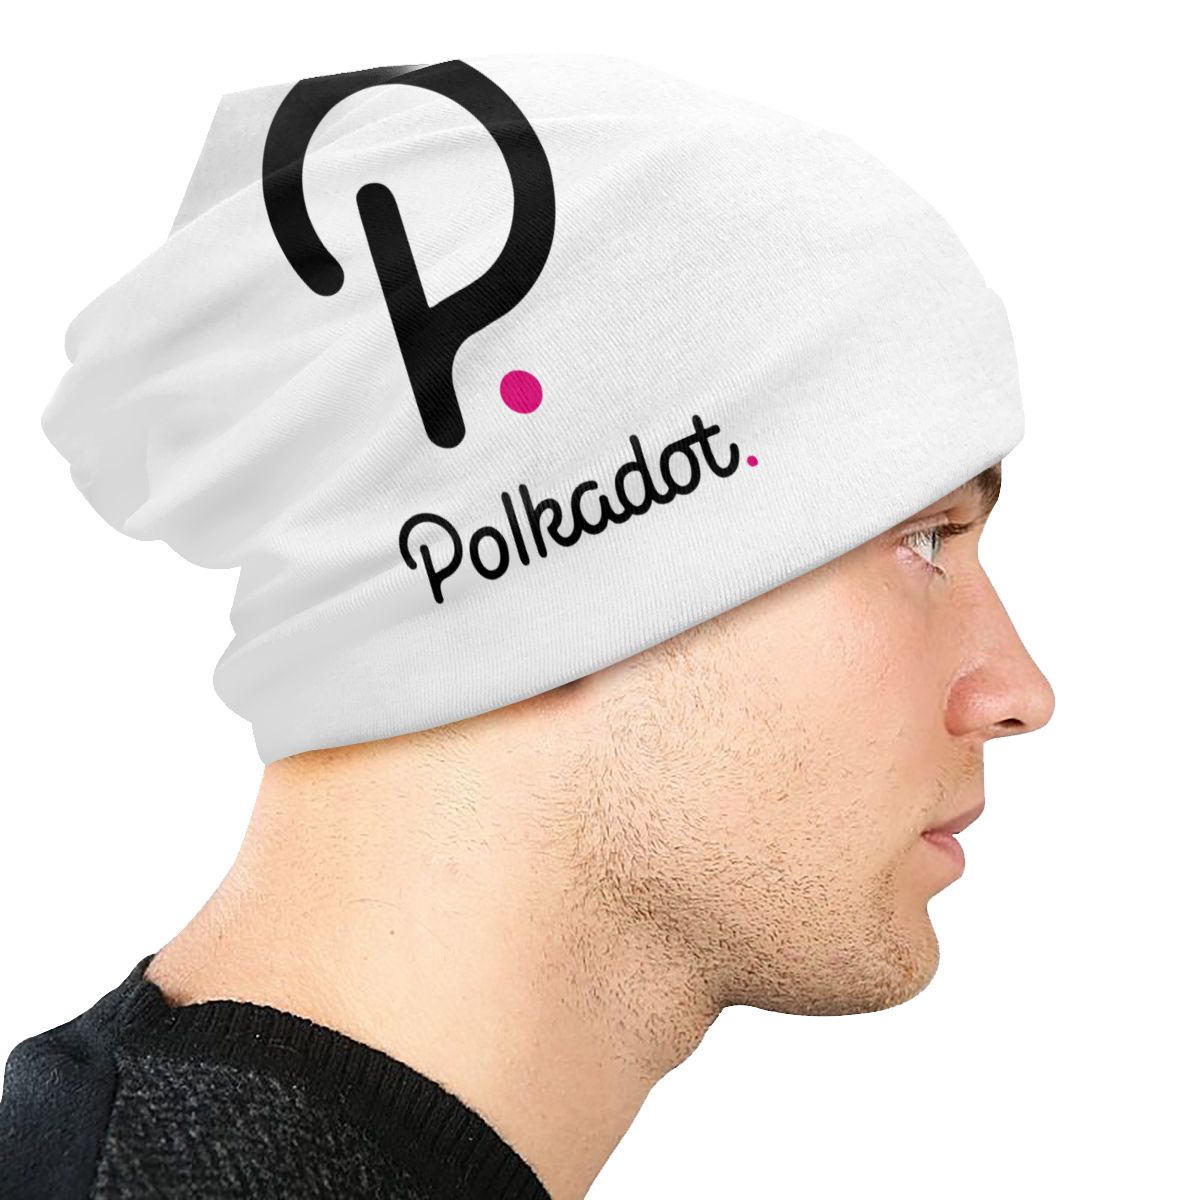 Polkadot knitted hat